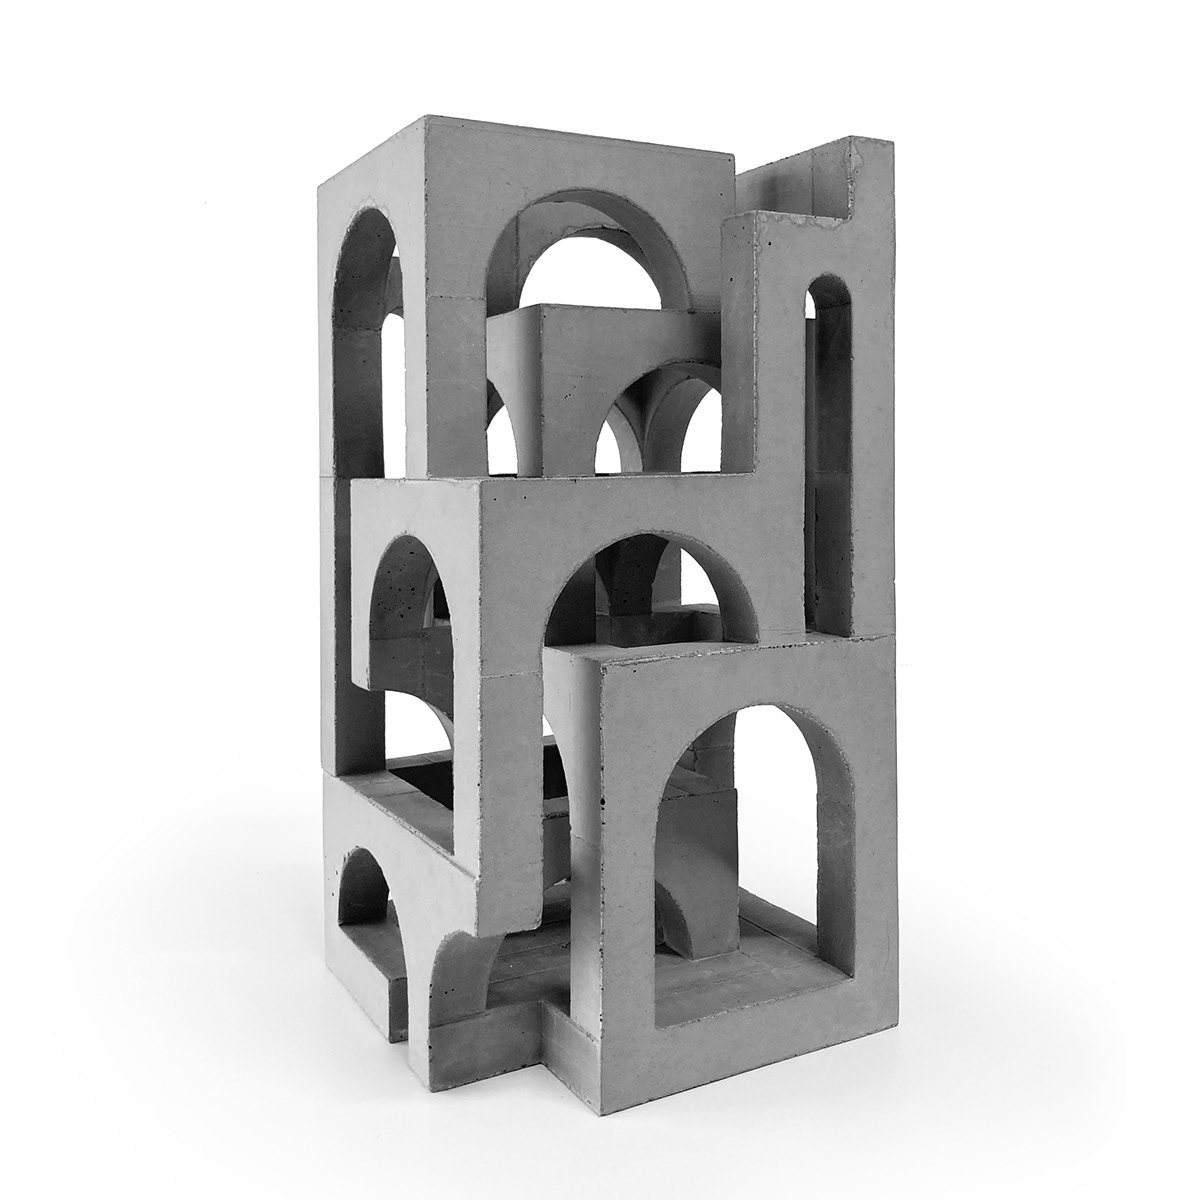 3D Arc arches architecture artwork Brutalism Brutalist chirico model sculpture